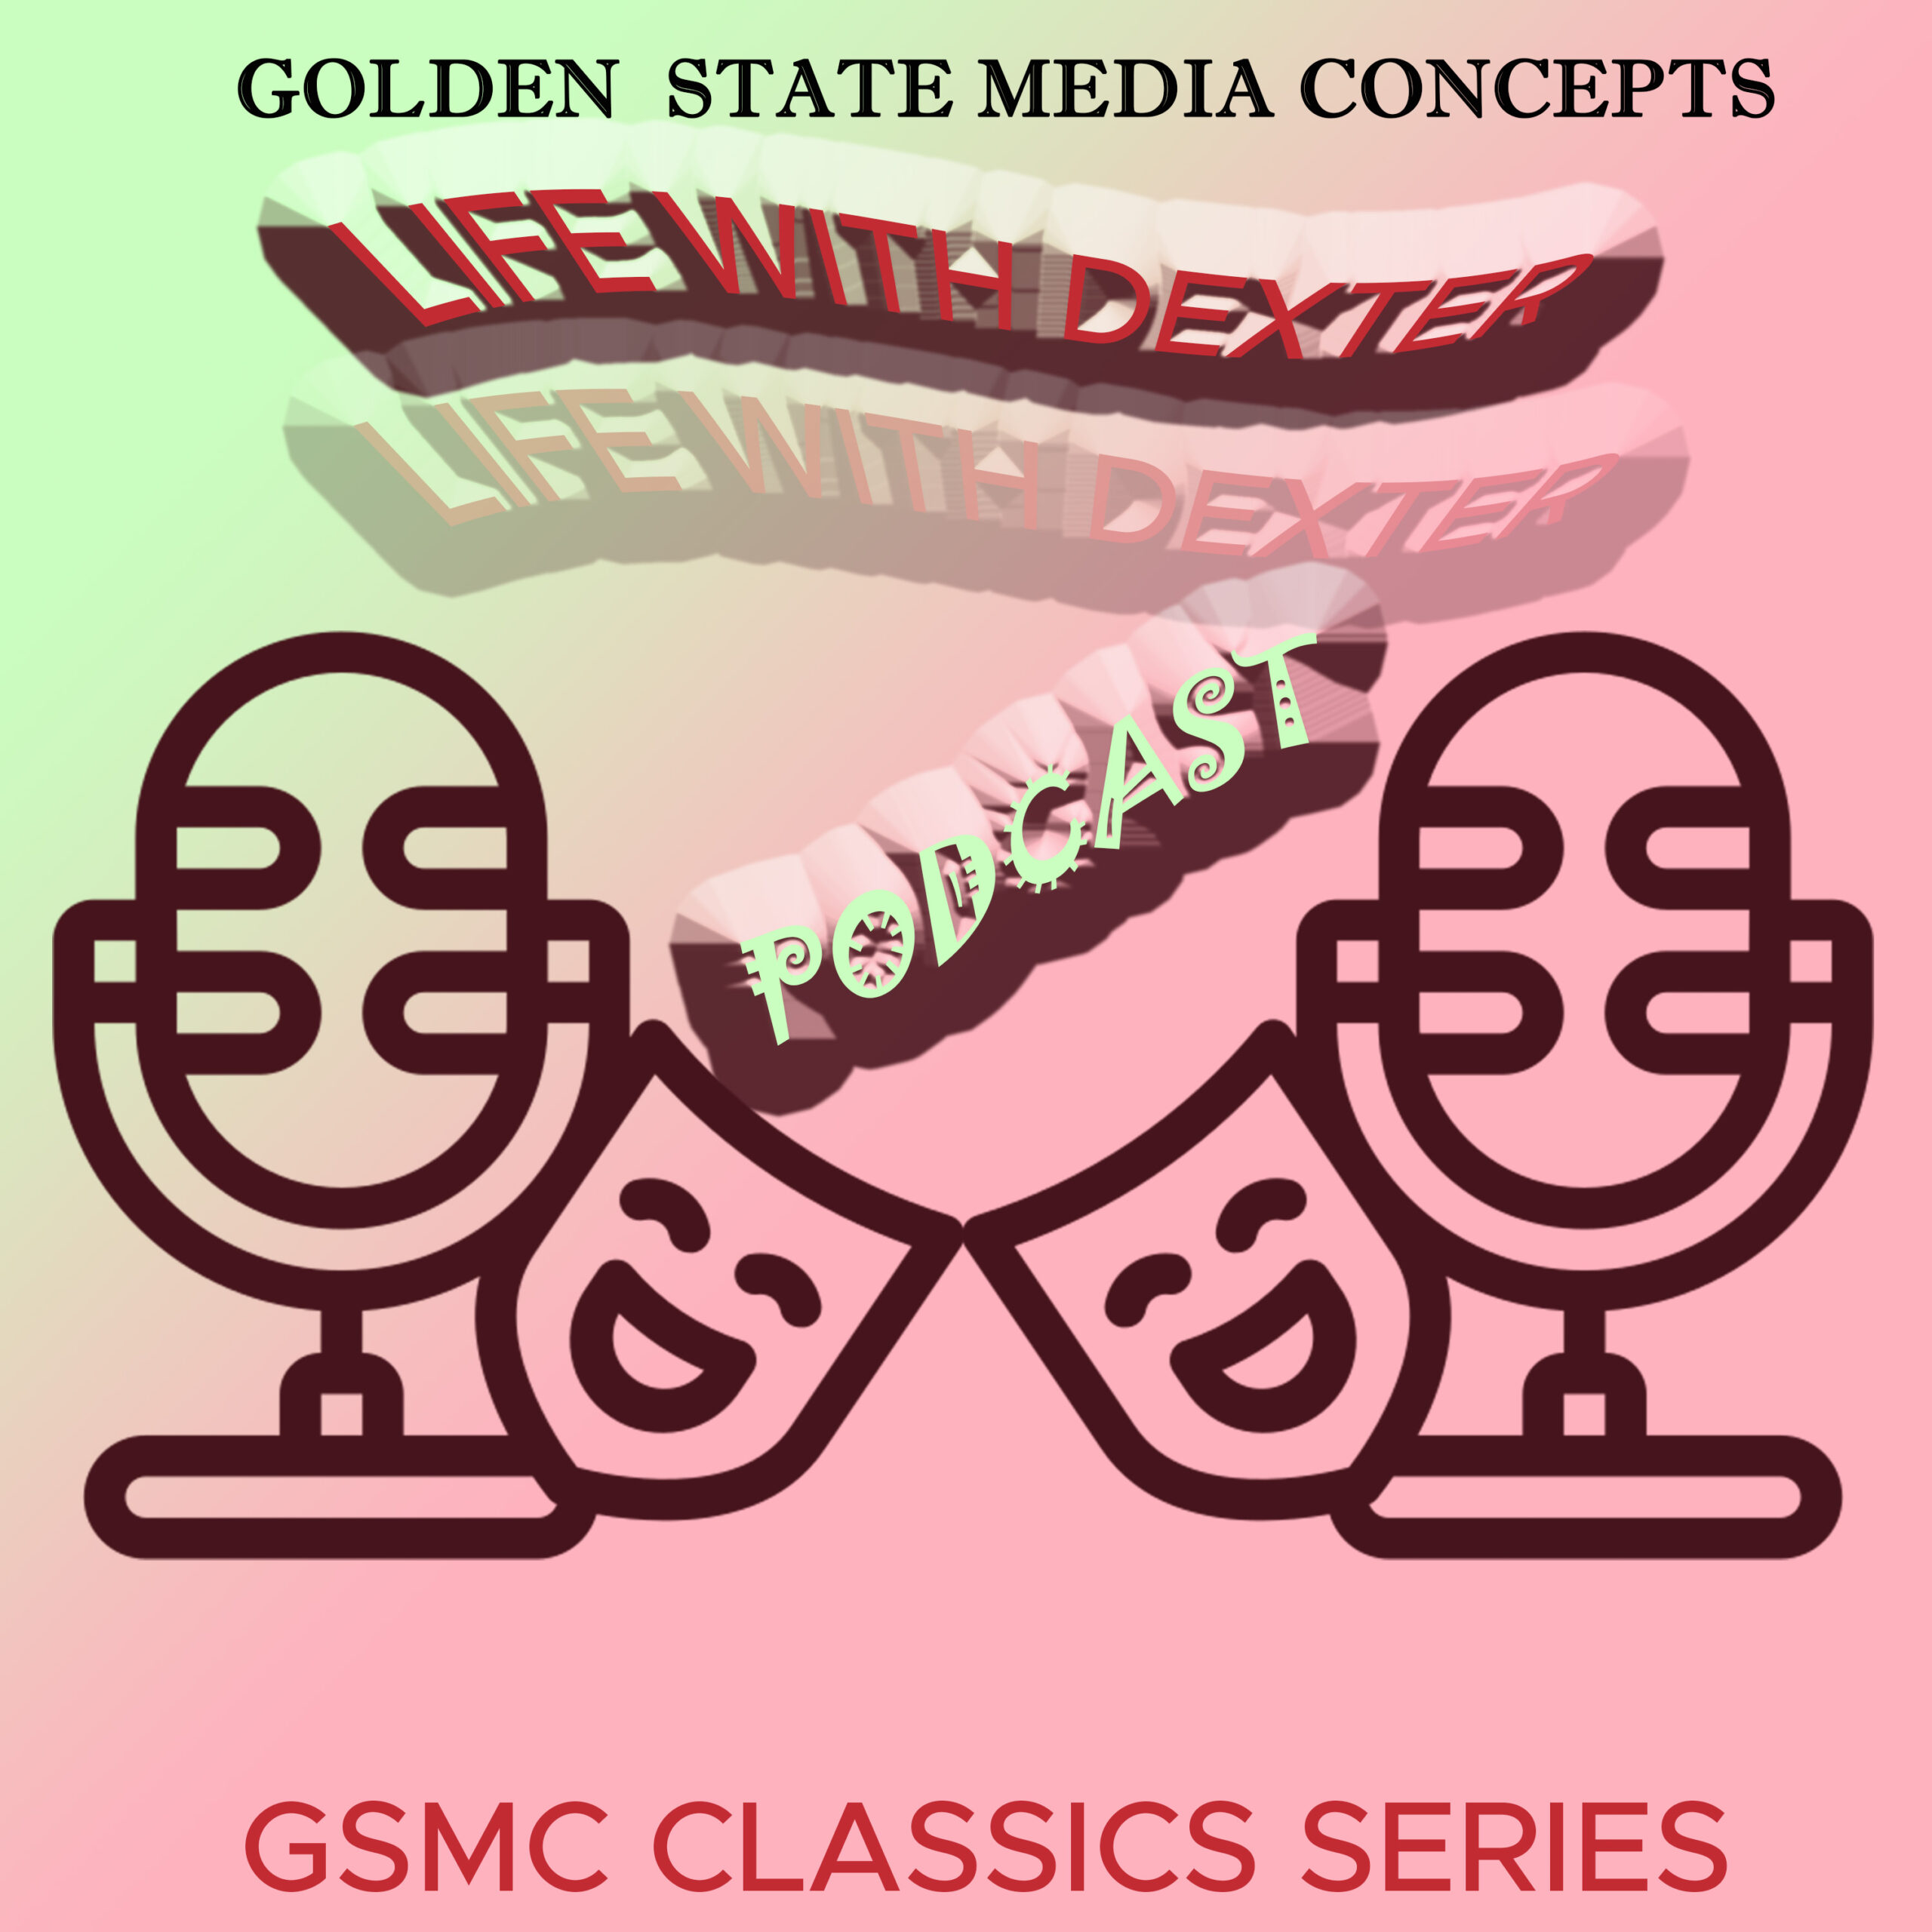 GSMC Classics: Life with Dexter